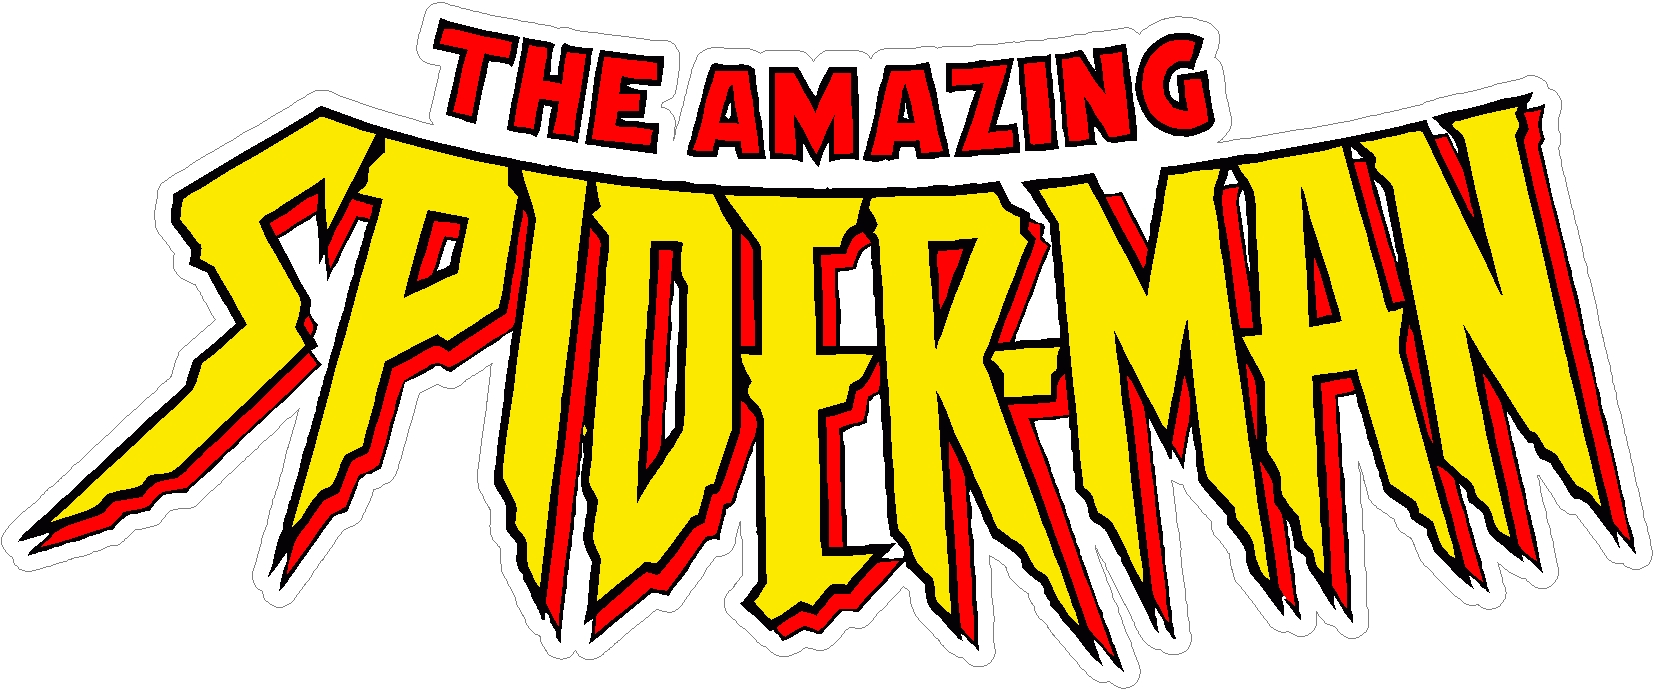 spiderman-logo-amazing.jpg